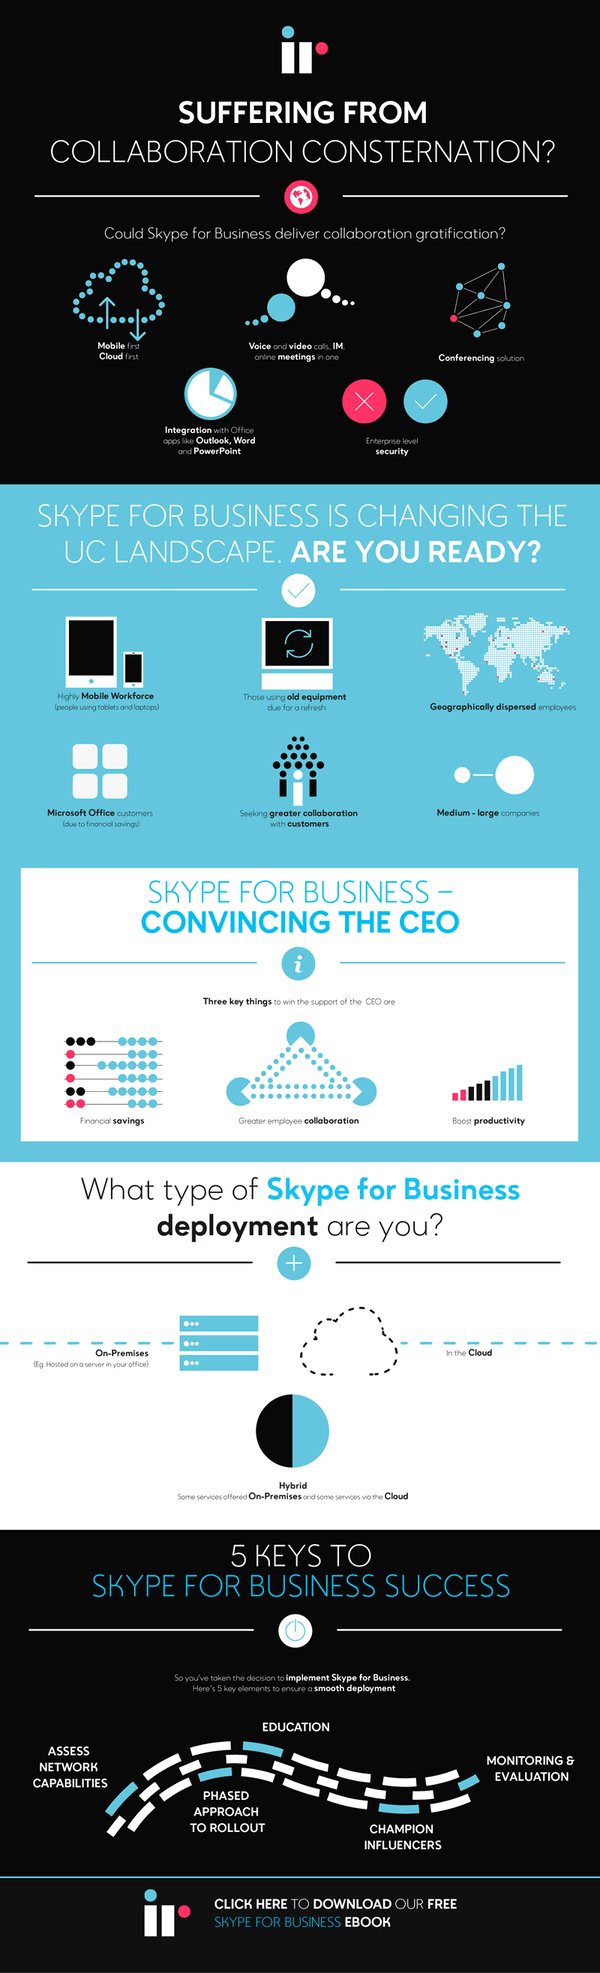 Skype for Business deployment